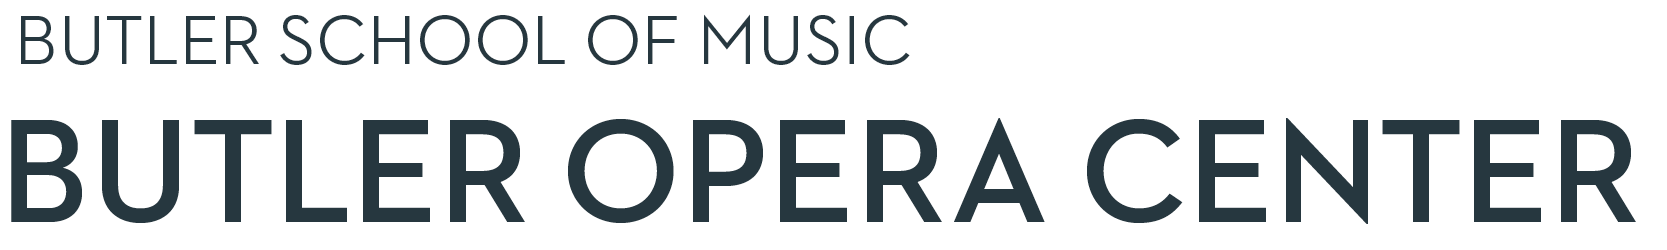 Butler School of Music Butler Opera Center Home Page